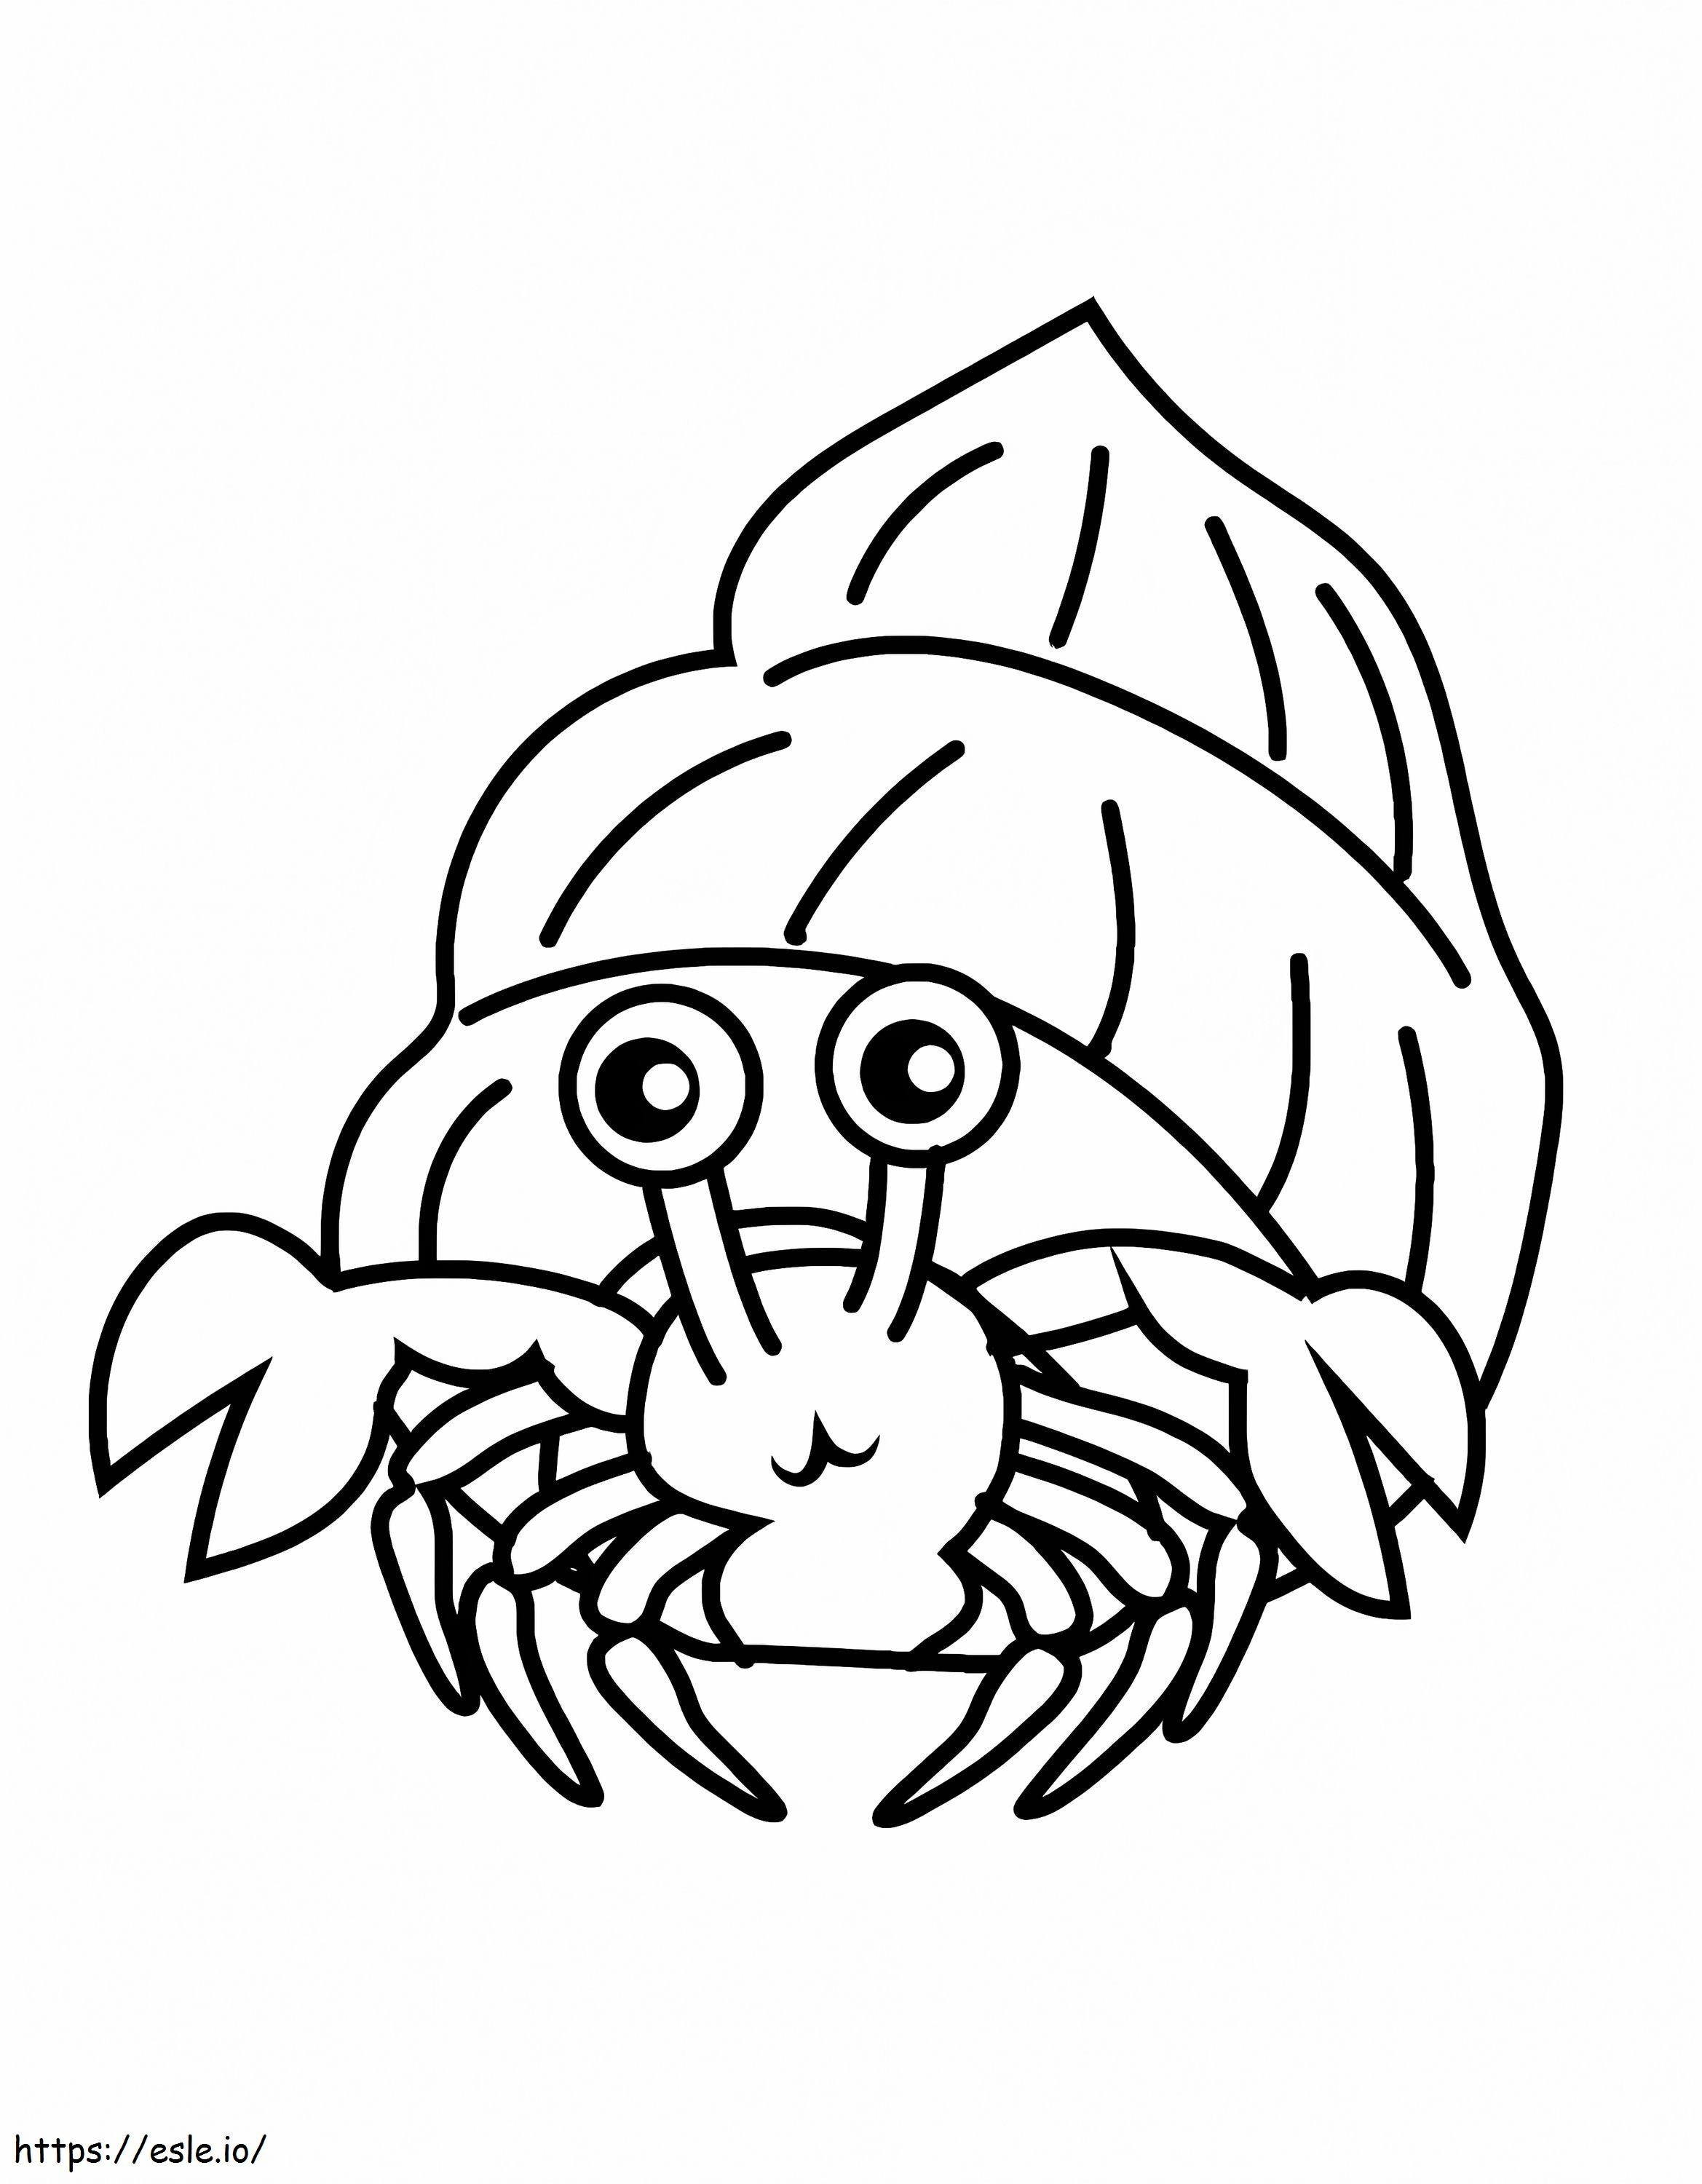 Hermit Crab 11 coloring page